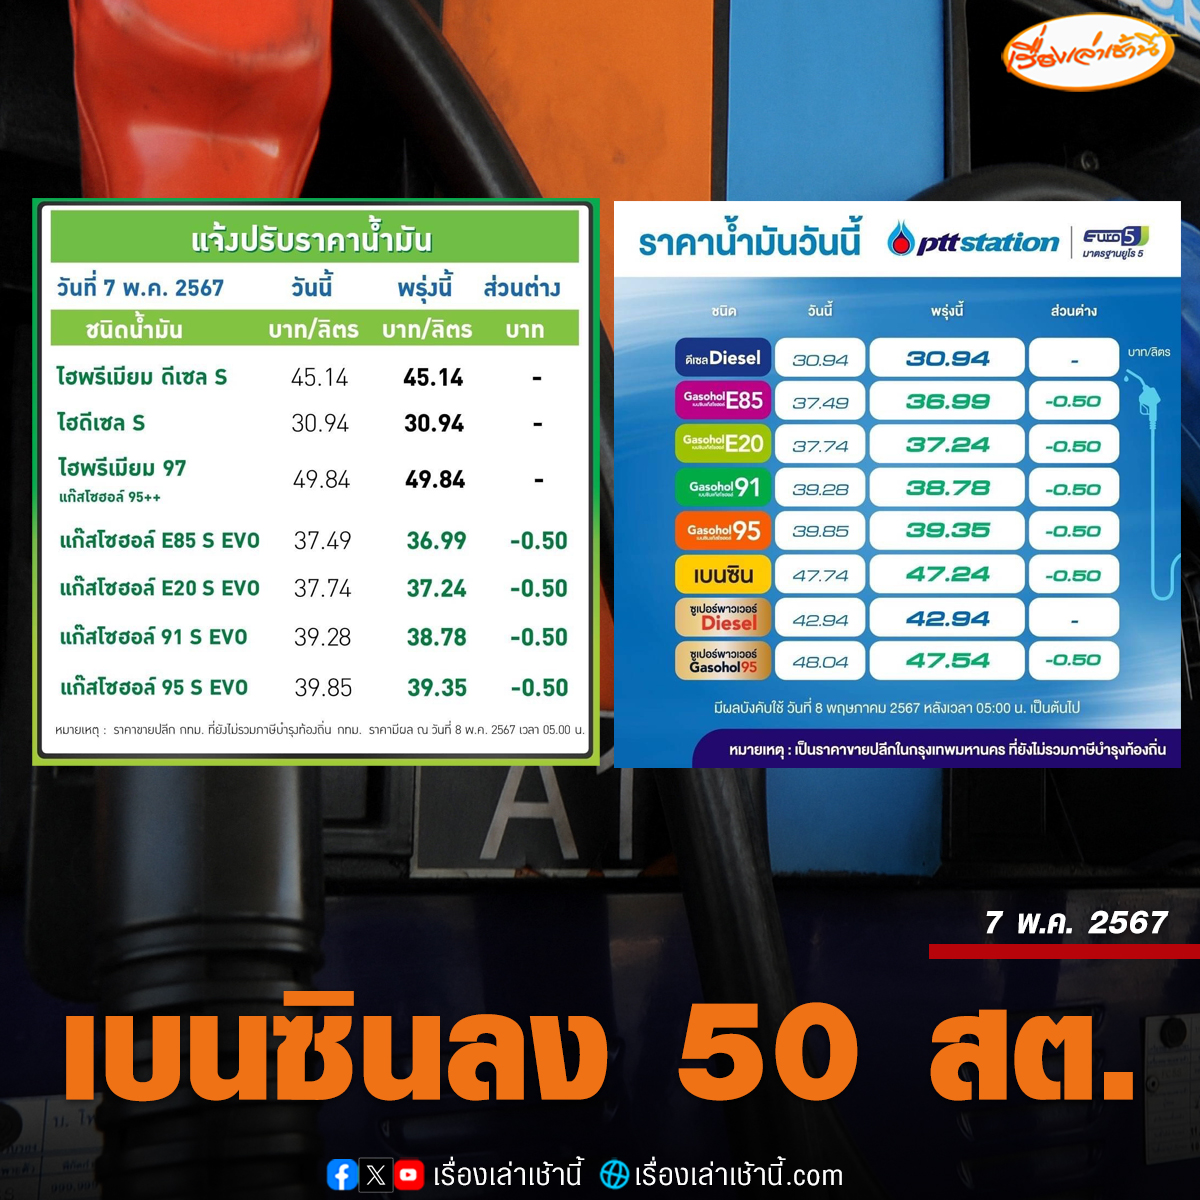 PTT Station และ บางจาก ปรับราคาขายปลีกน้ำมันเบนซิน แก๊สโซฮอล์ทุกชนิด และพรีเมี่ยม GSH95 ลดลง 0.50 บาทต่อลิตร ส่วนกลุ่มดีเซลคงเดิม มีผล 8 พ.ค. 2567 เวลา 05.00 น. เป็นต้นไป โดยราคาขายปลีก PTT Station จะเป็น ดังนี้ ULG = 47.24, GSH95 = 39.35, E20 = 37.24, GSH91 = 38.78, E85 =…